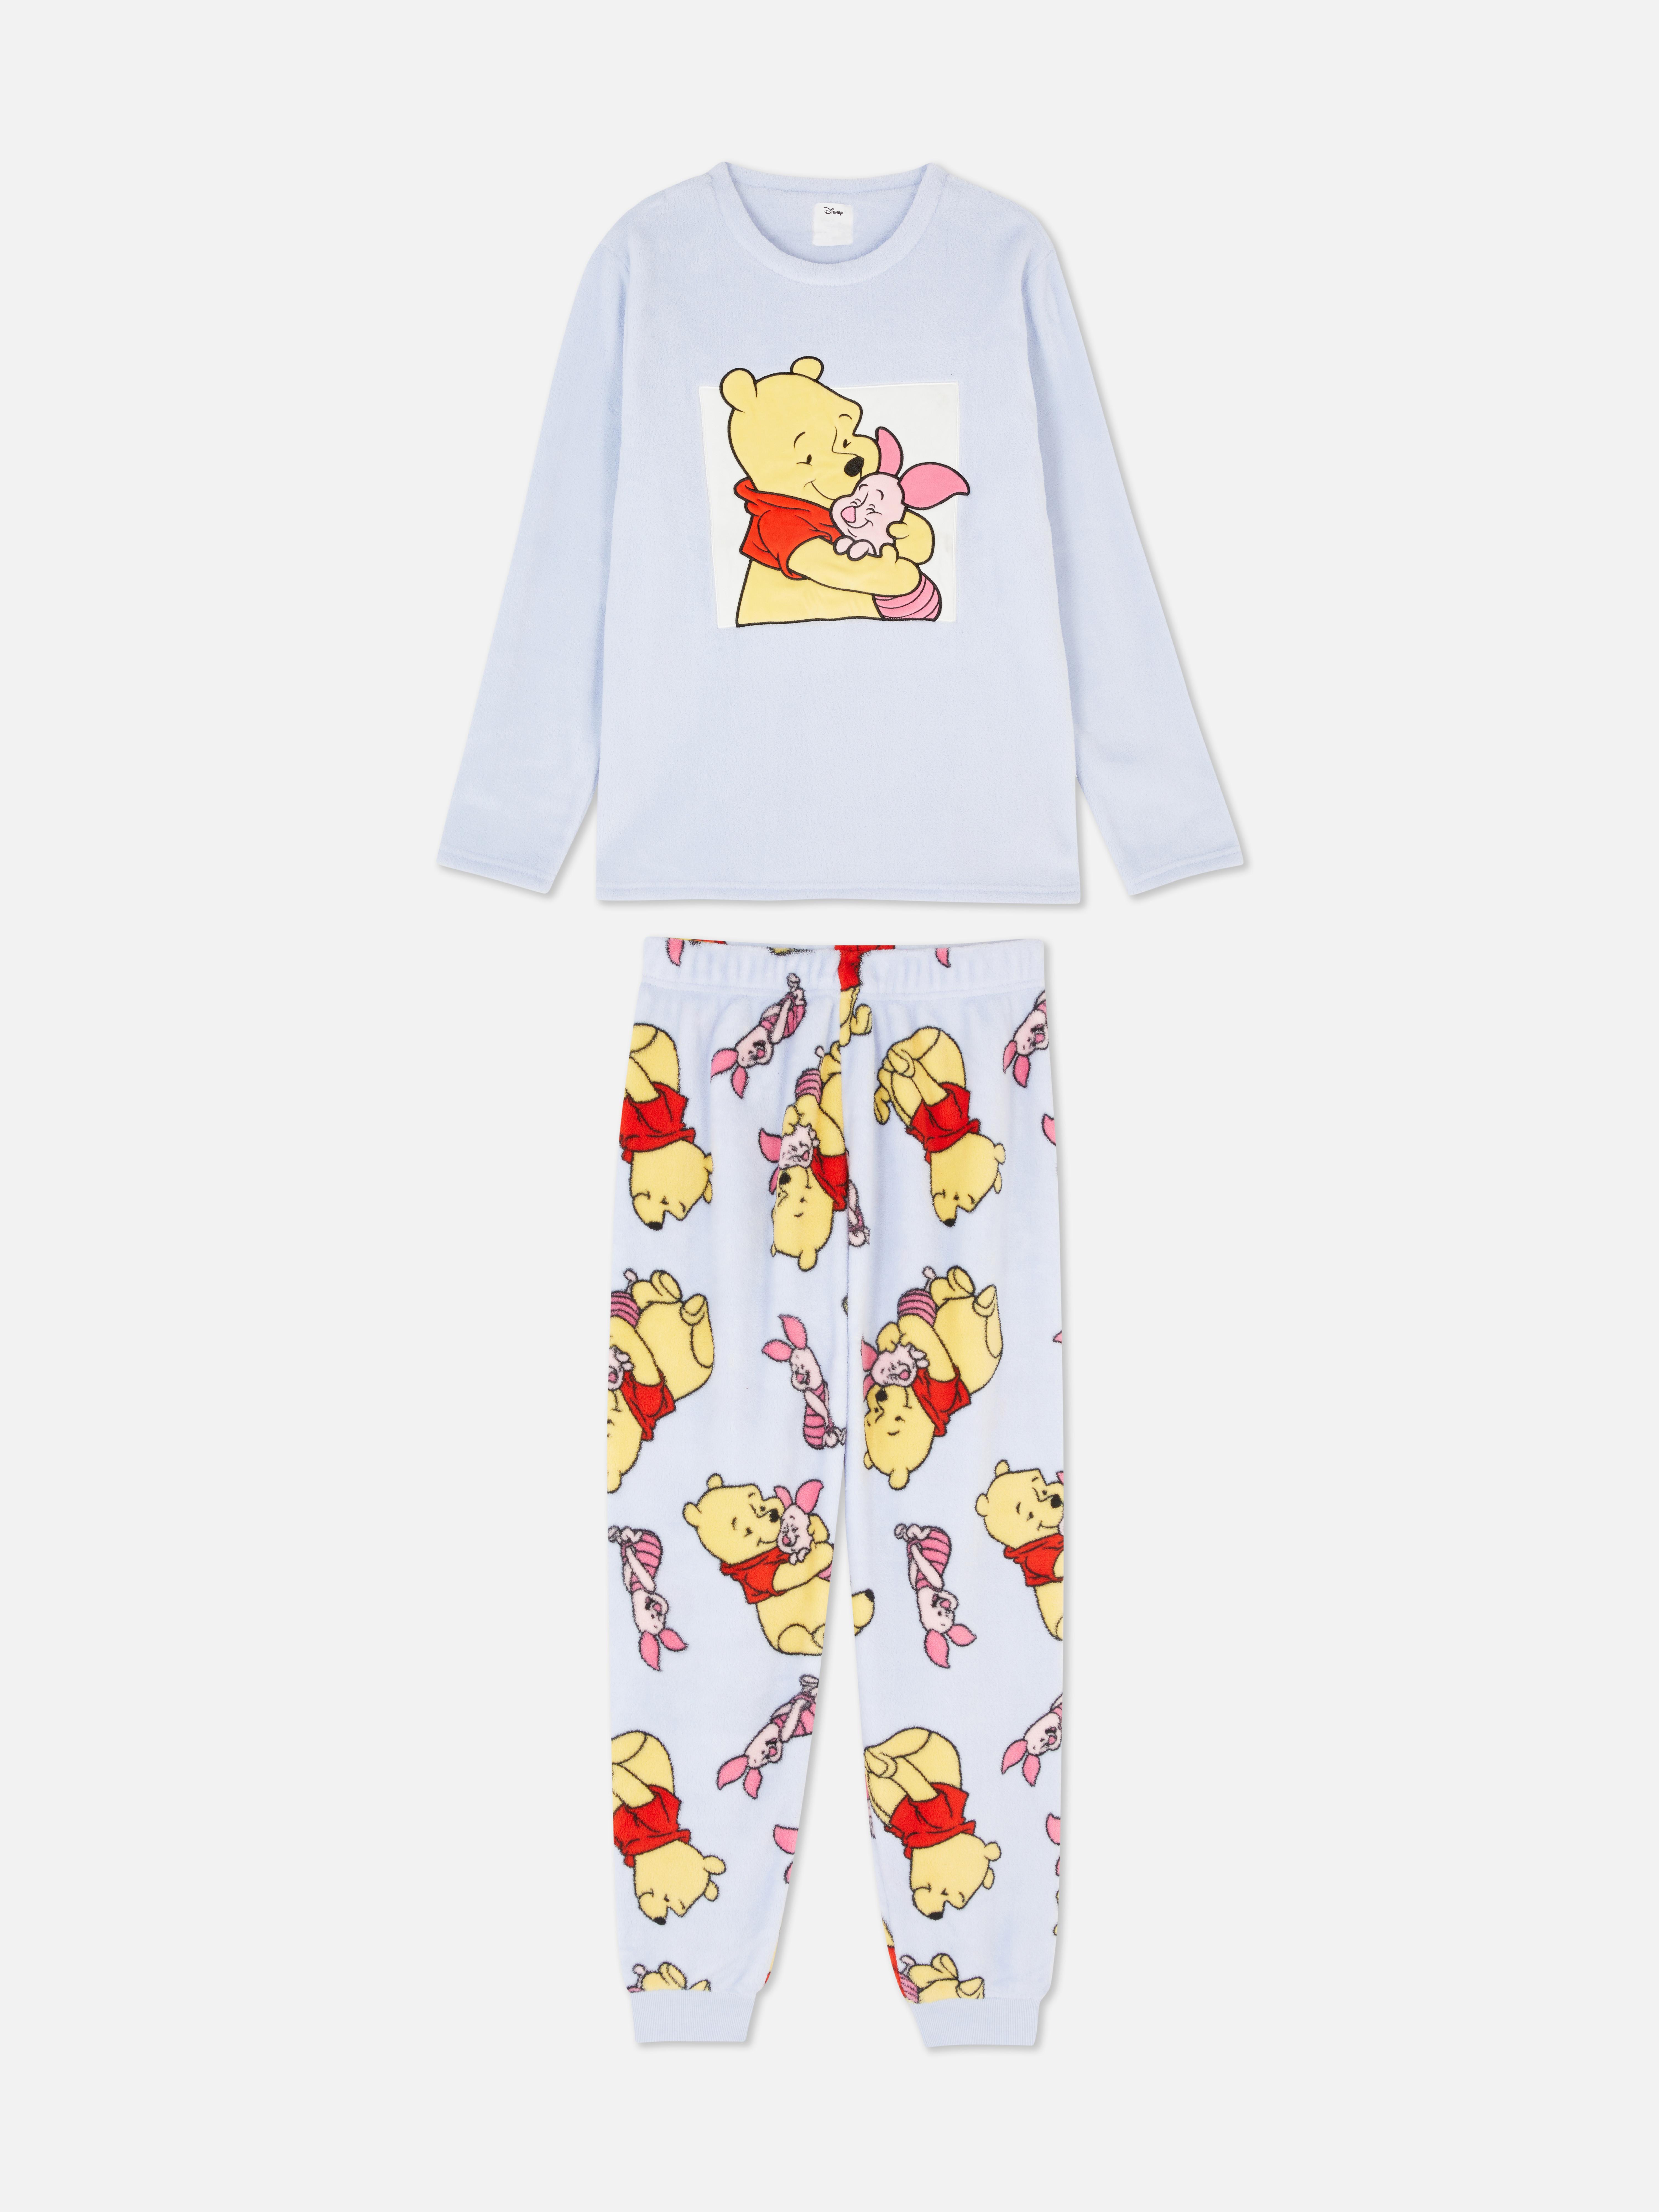 Pijama malha polar personagem Disney